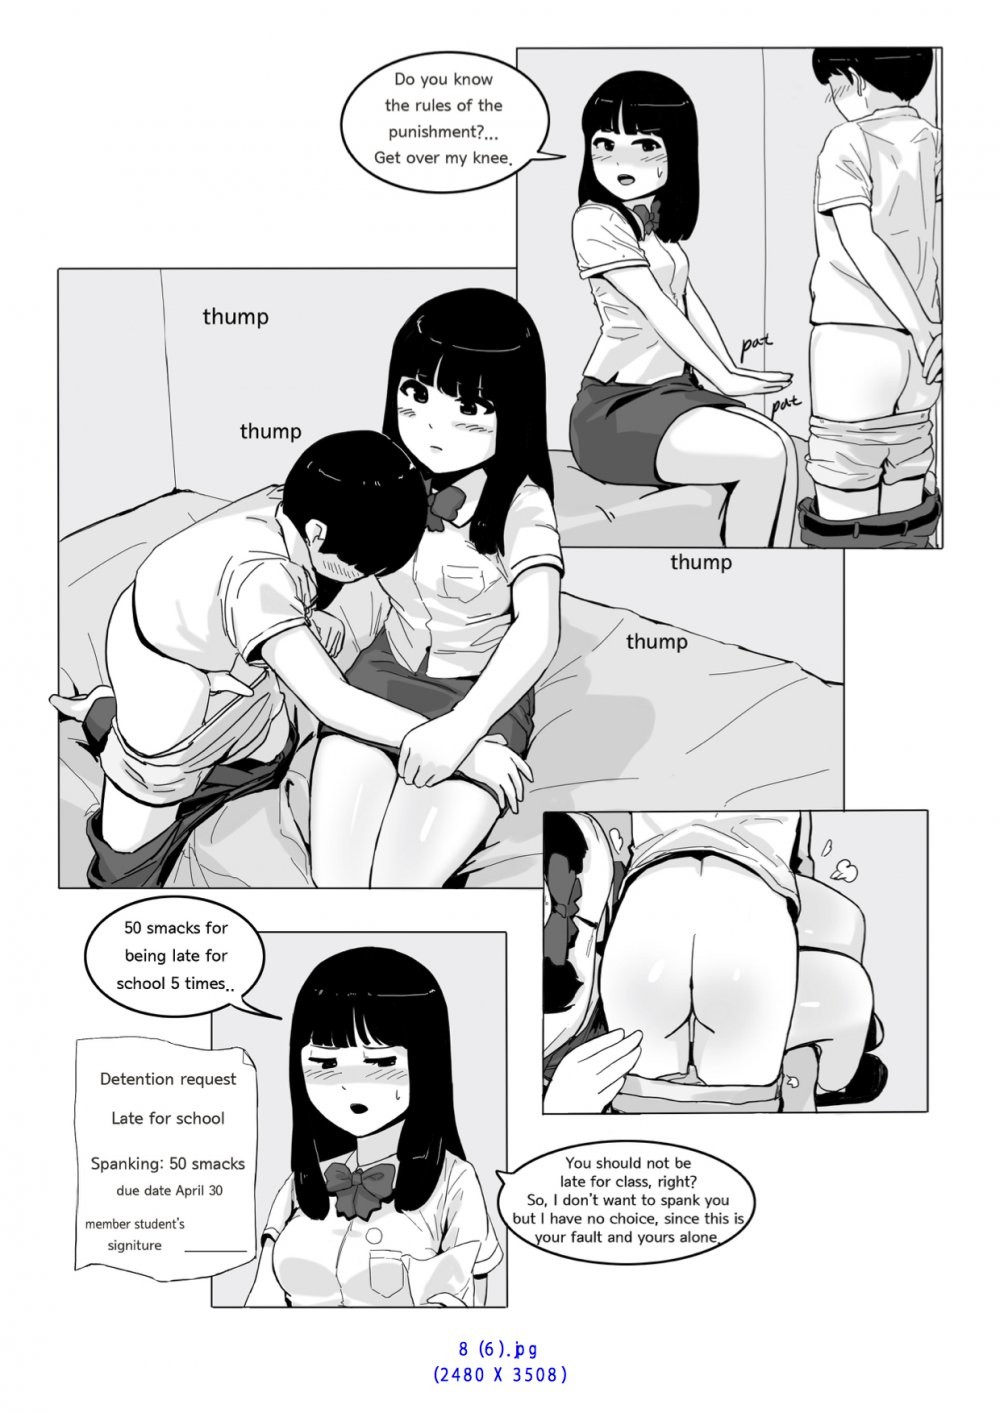 Spanking - Oshiritataki porn comic picture 24